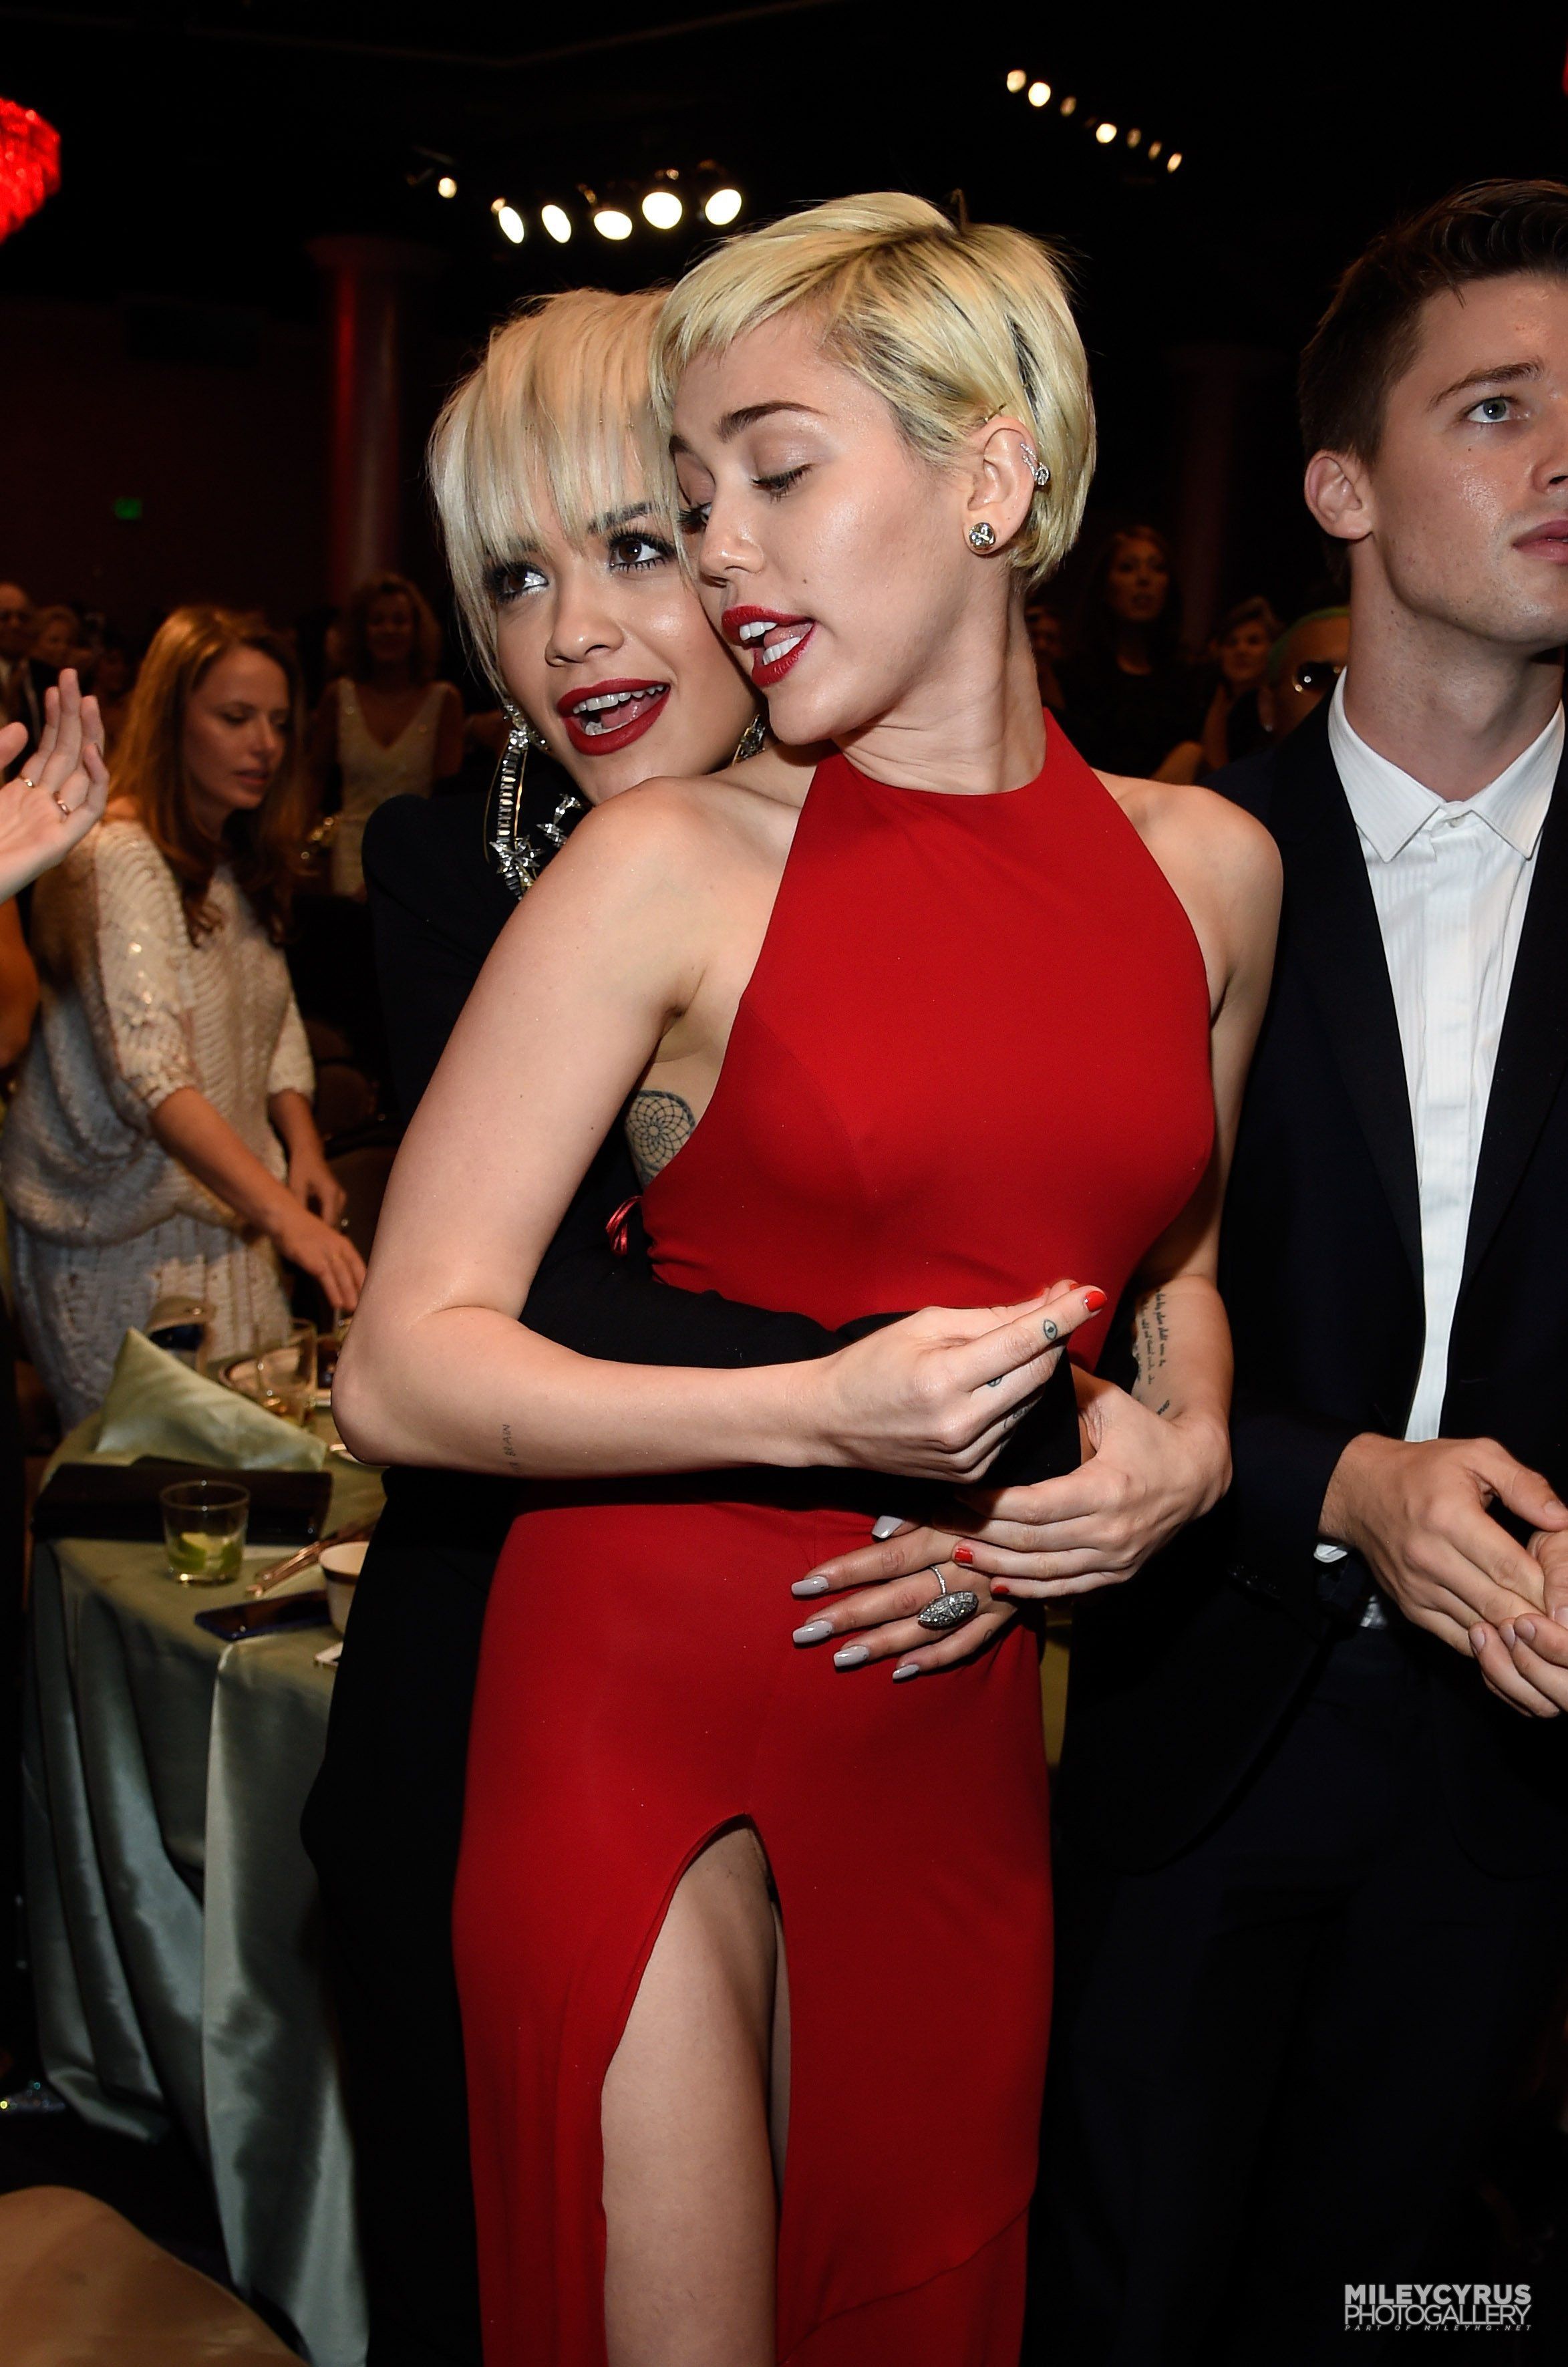 Miley cyrus upskirt jpg